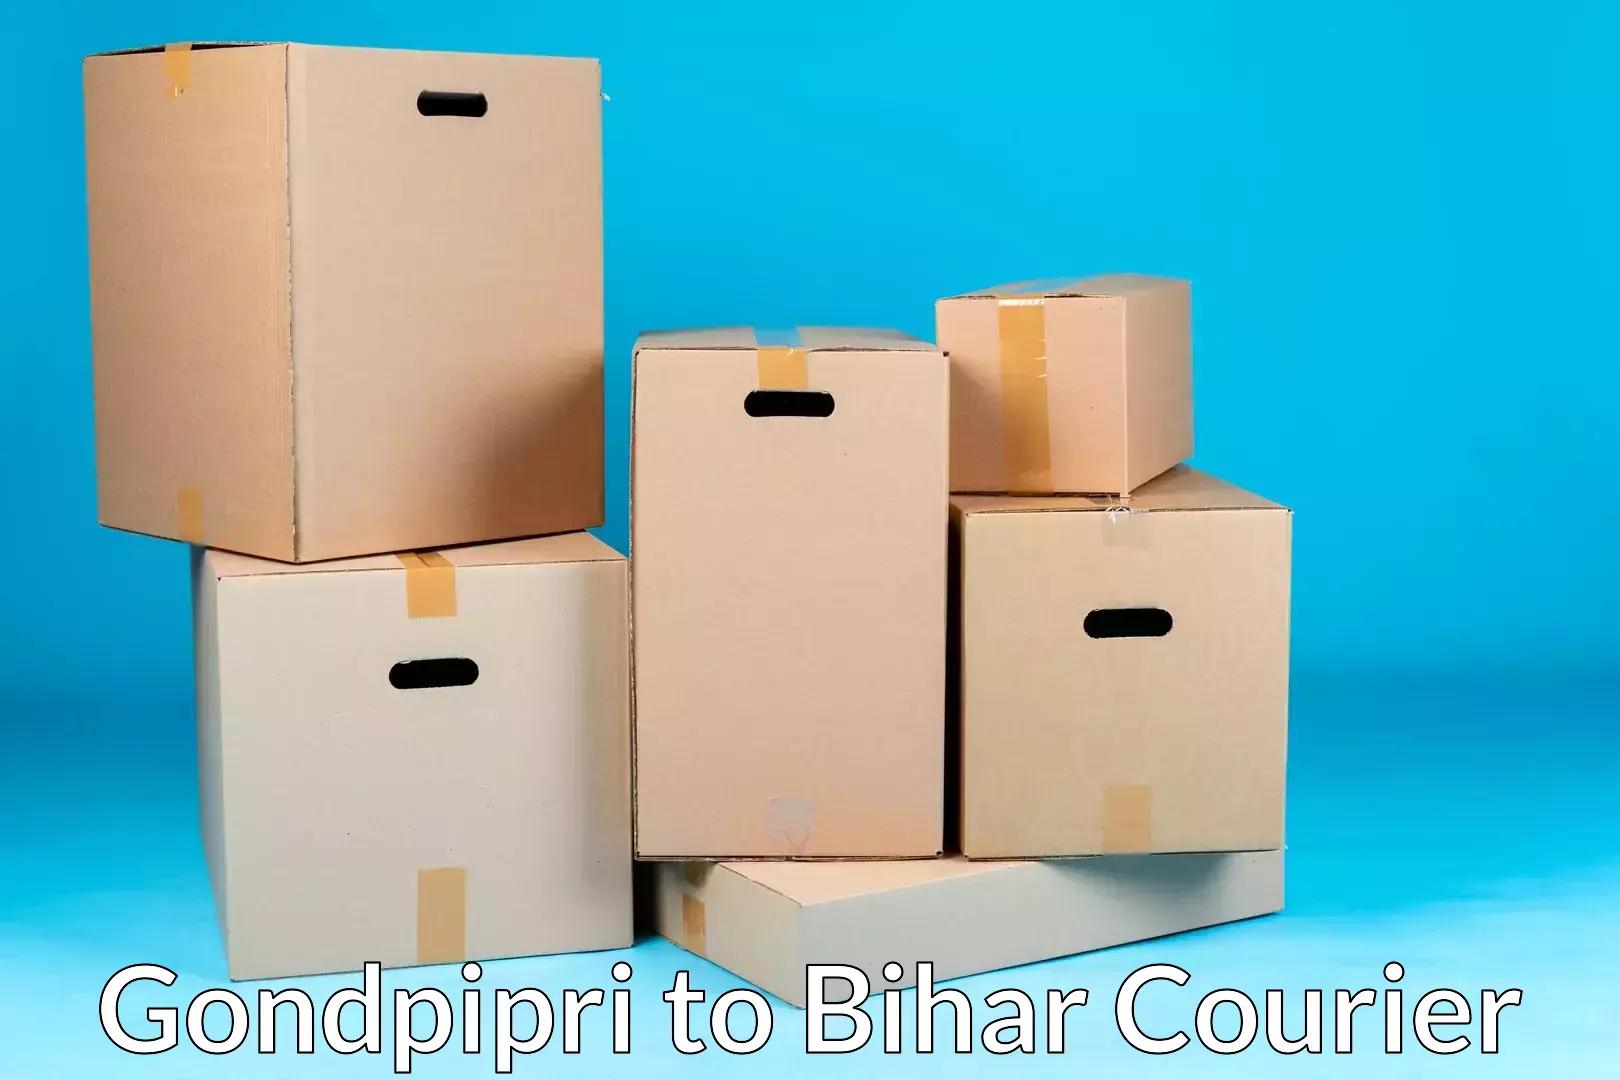 Furniture moving specialists Gondpipri to Bihar